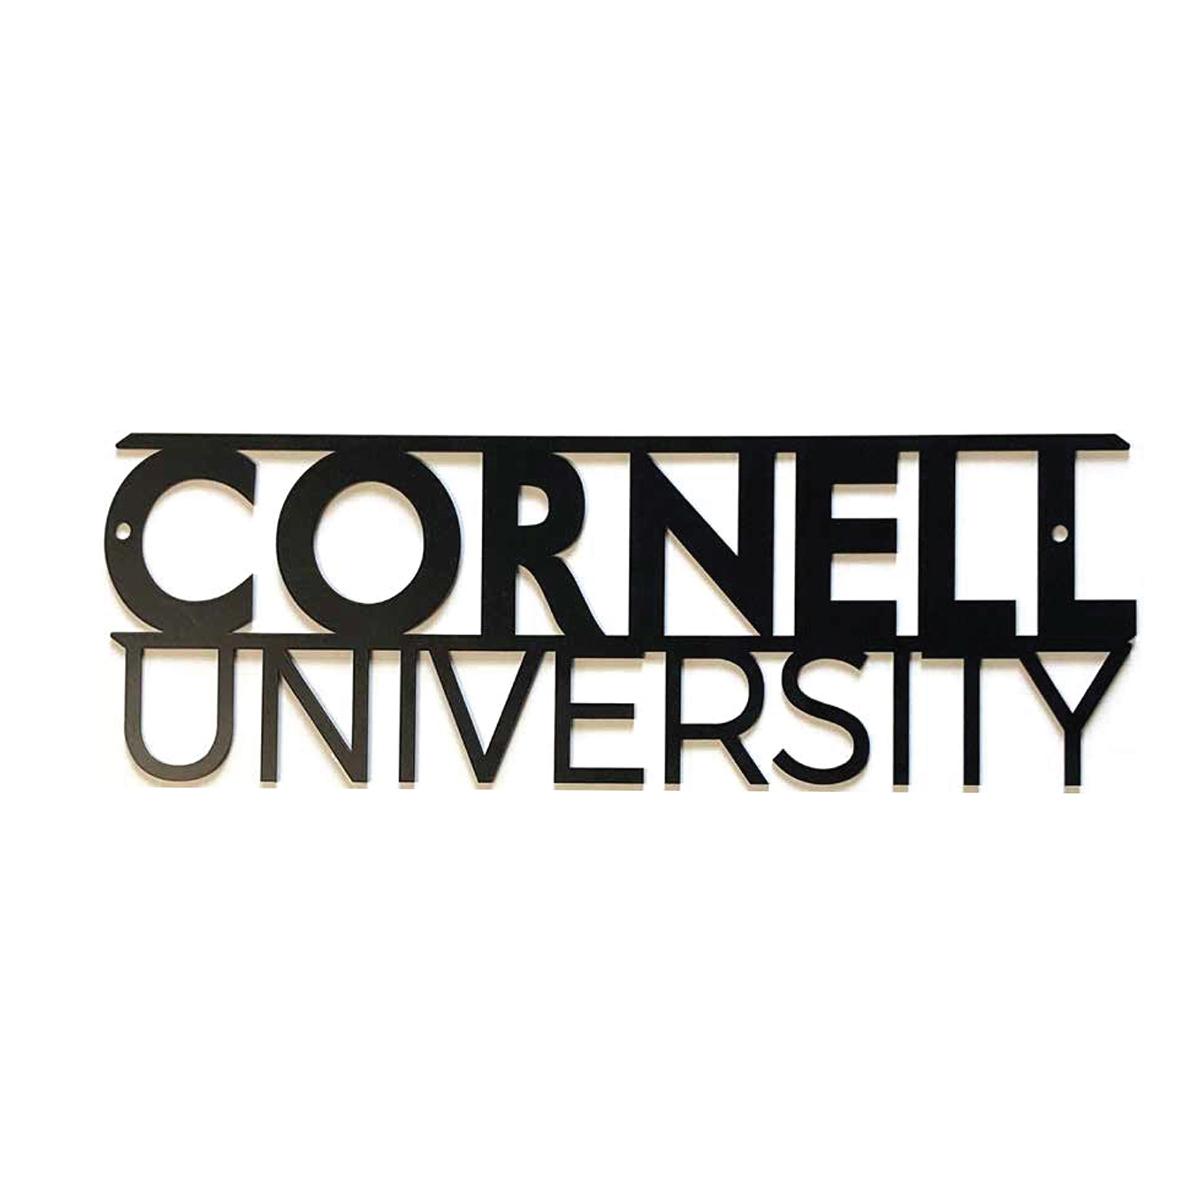 Cornell University Metal Wall Sign